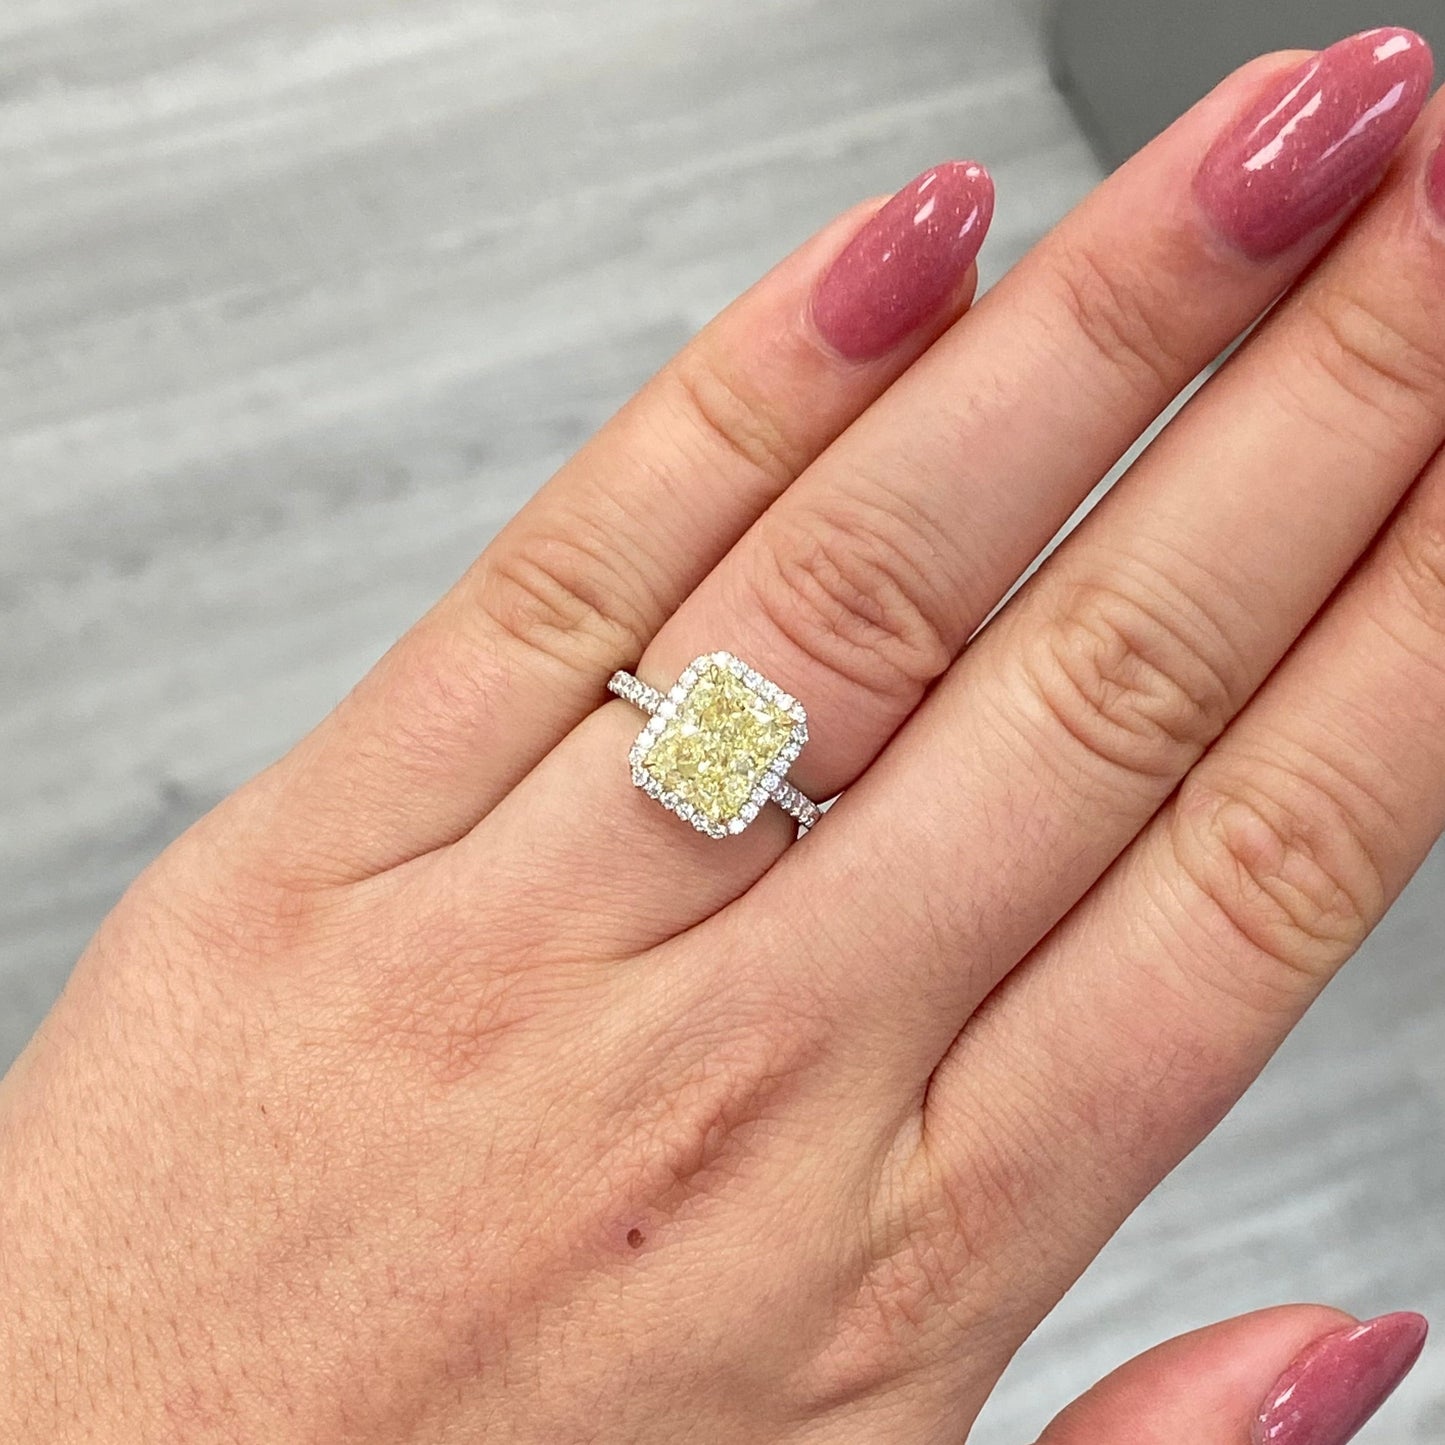 Light yellow diamond ring. Light yellow diamond. Yellow diamond engagement ring. Yellow diamond jewelry. Gia certified yellow diamonds